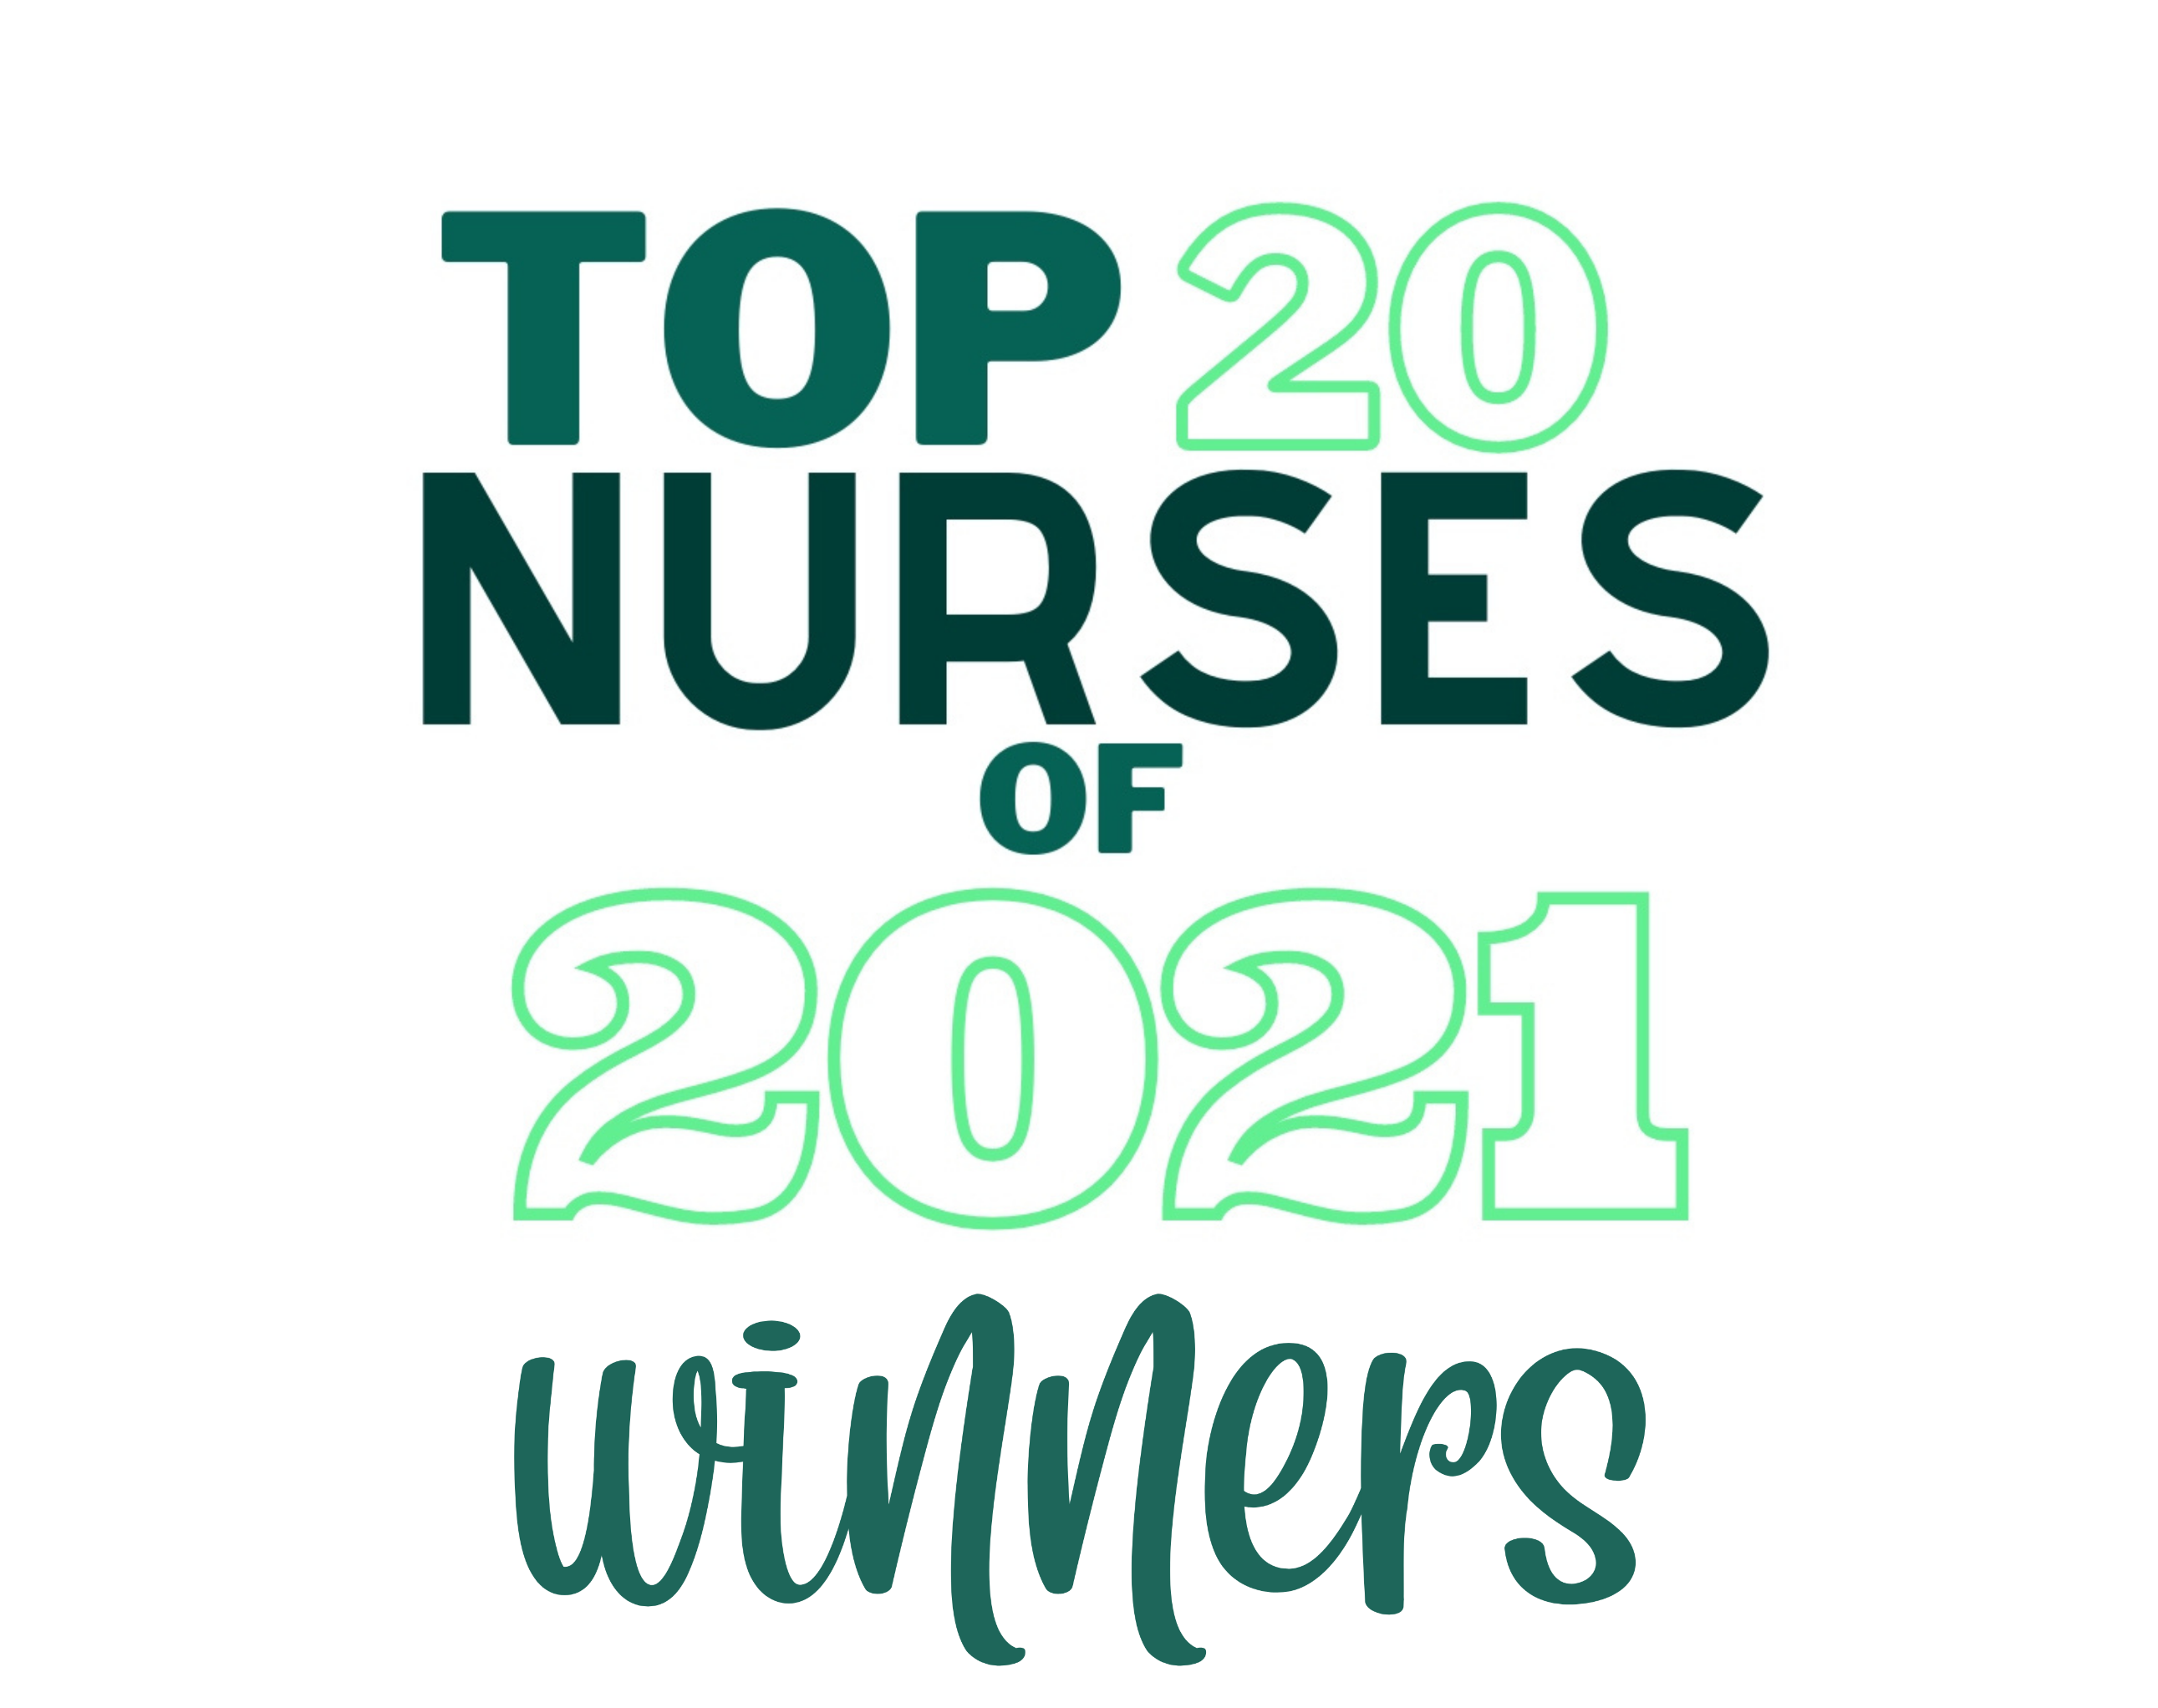 Announcing the Top 20 Nurses Award Winners of 2021